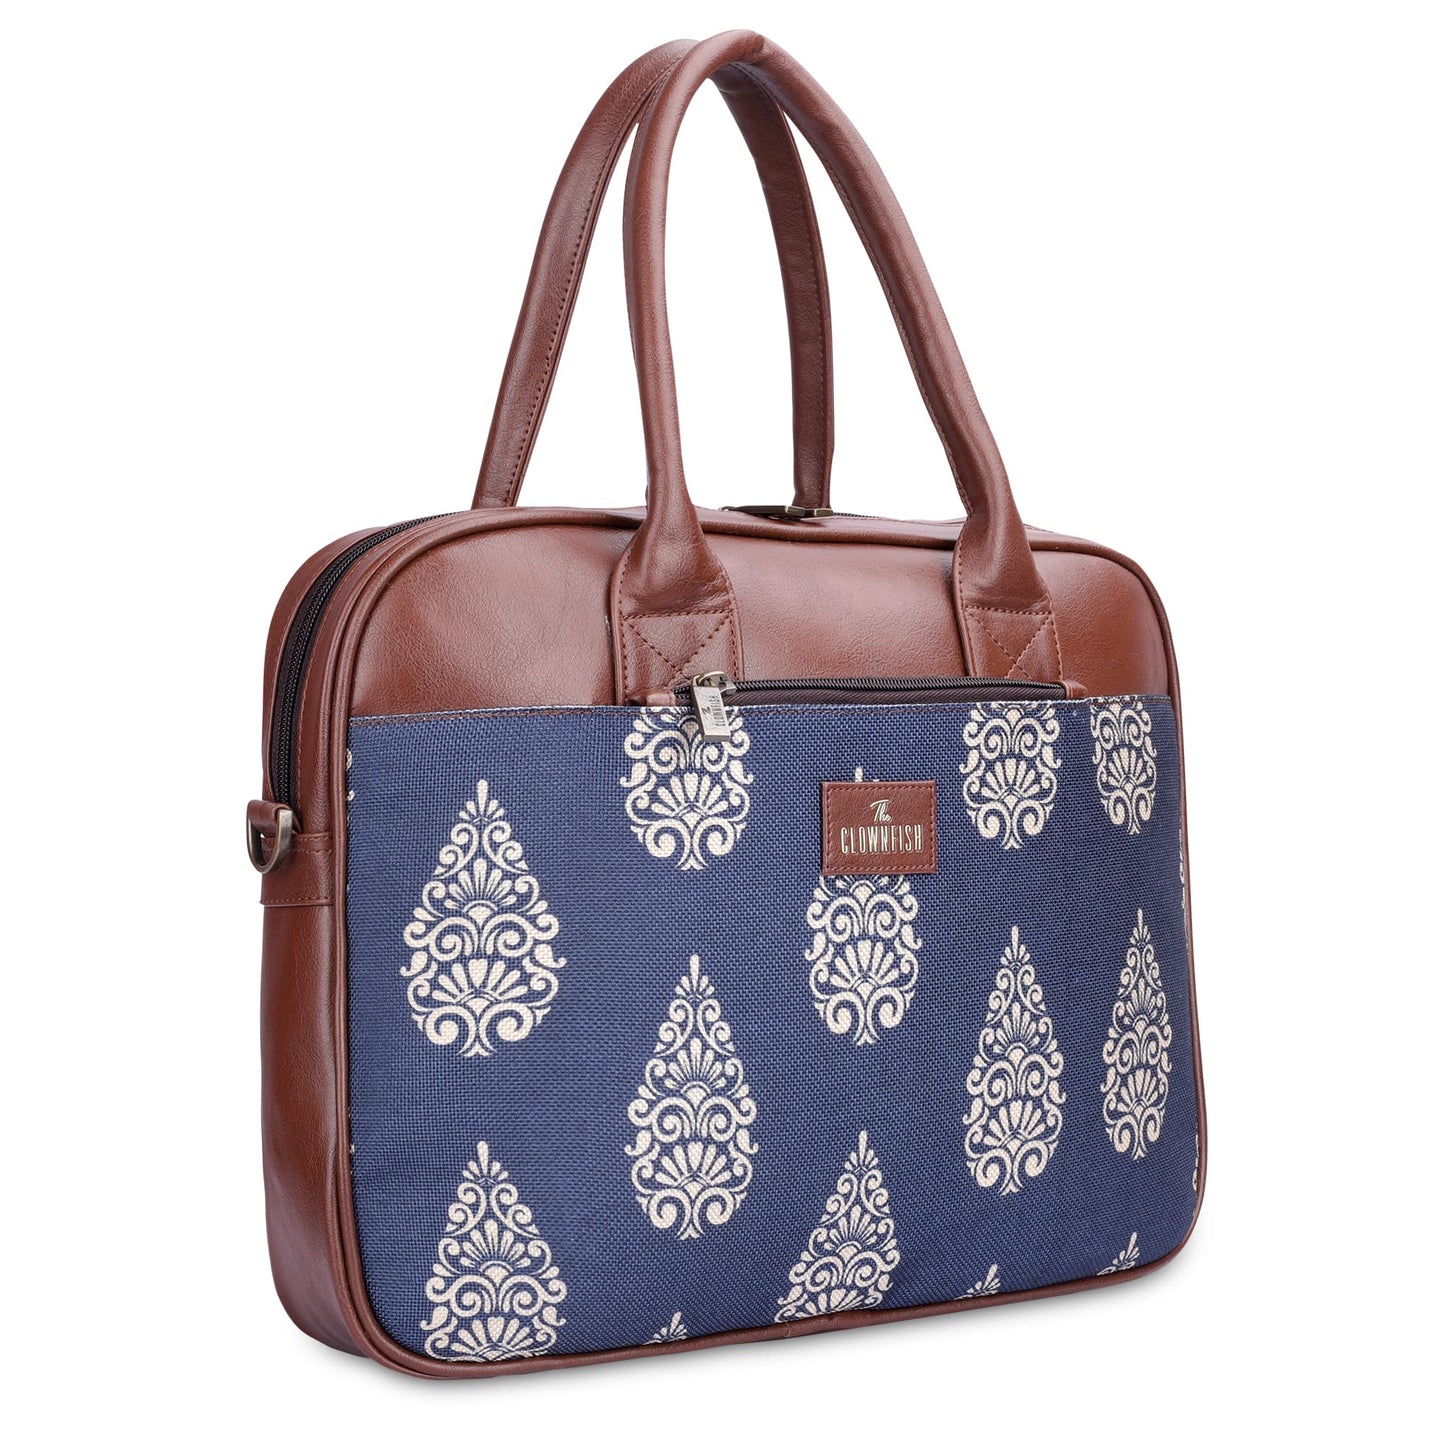 THE CLOWNFISH Deborah series 15.6 inch Laptop Bag For Women Printed Handicraft Fabric & Faux Leather Office Bag Briefcase Messenger Sling Handbag Business Bag (Navy Blue)